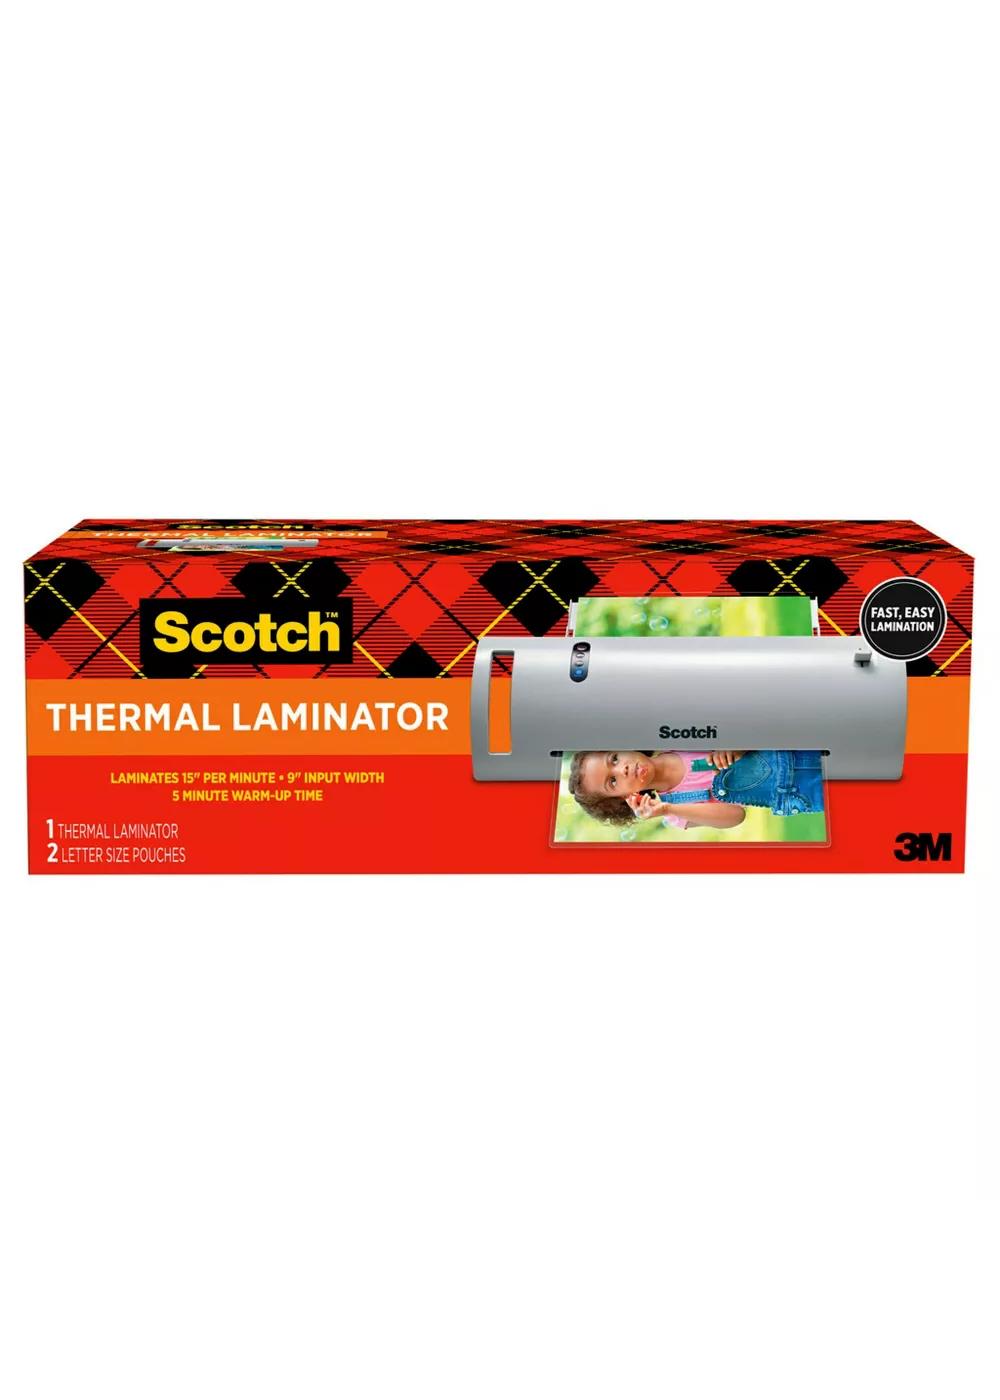 Scotch Thermal laminator; image 1 of 3